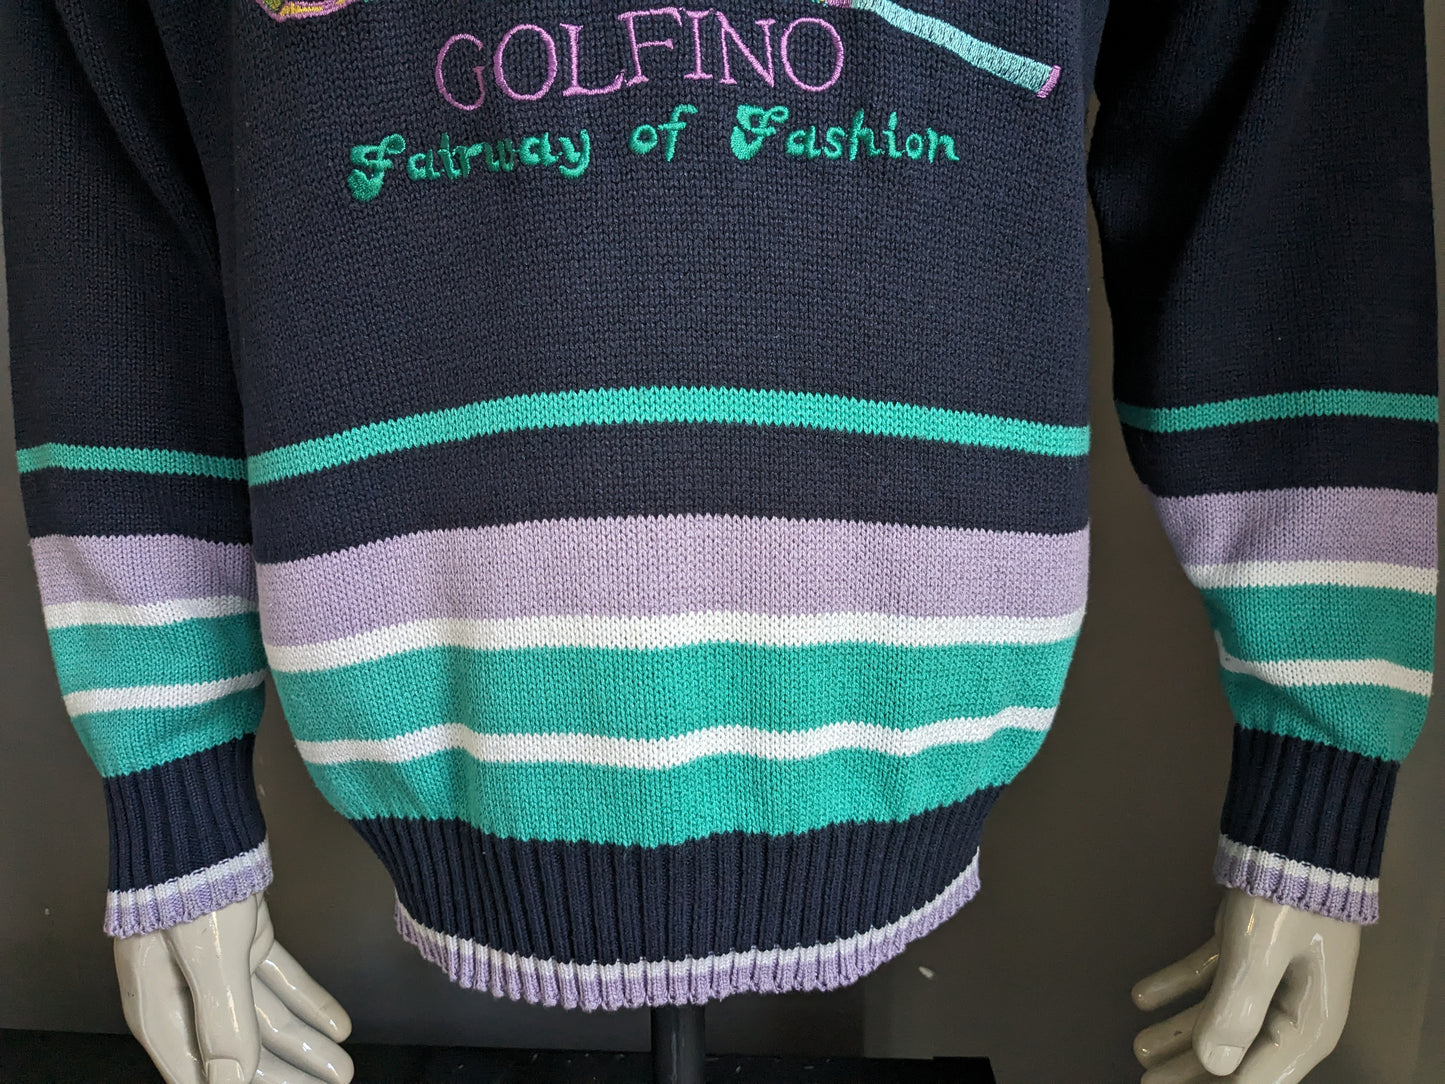 Vintage golfino sweater. Blue green purple colored. Size L / XL.